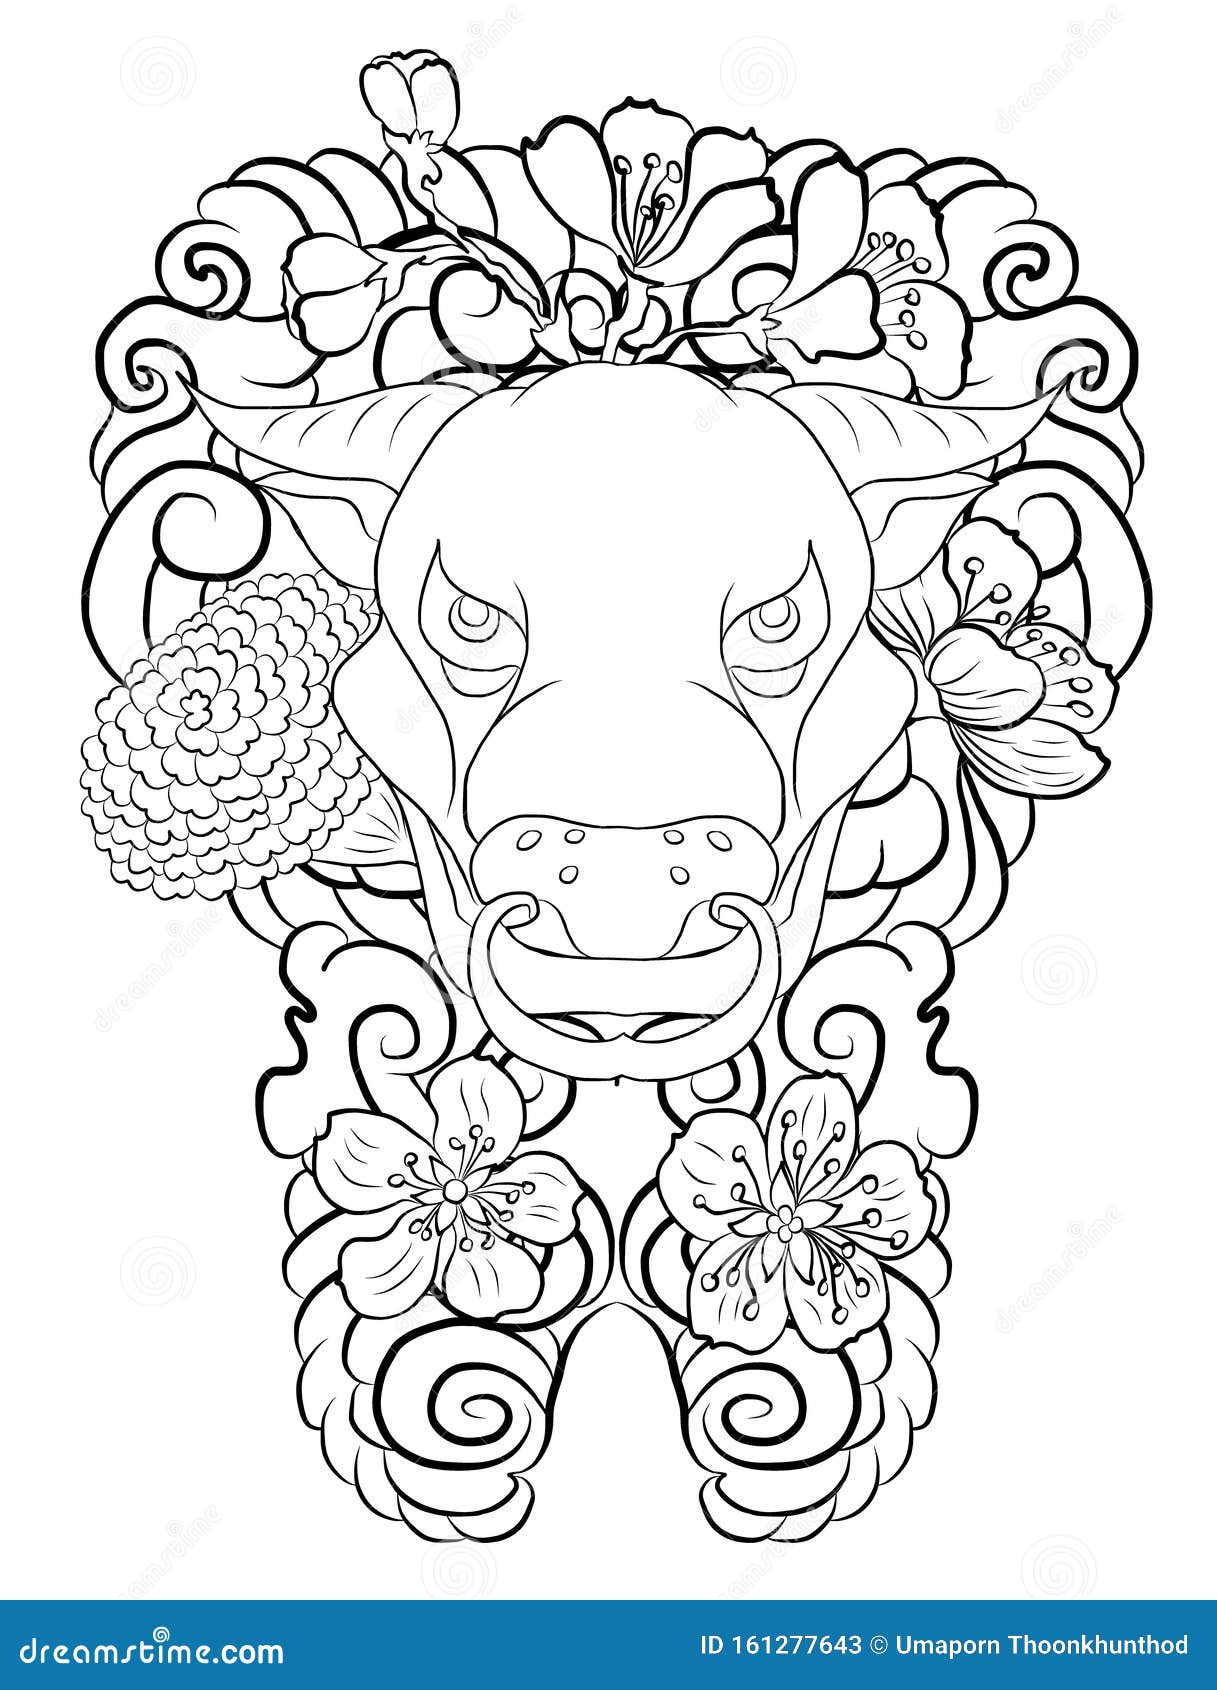 My beautiful cow tattoo With elderflowers vegetarian vegan mercy  compassion